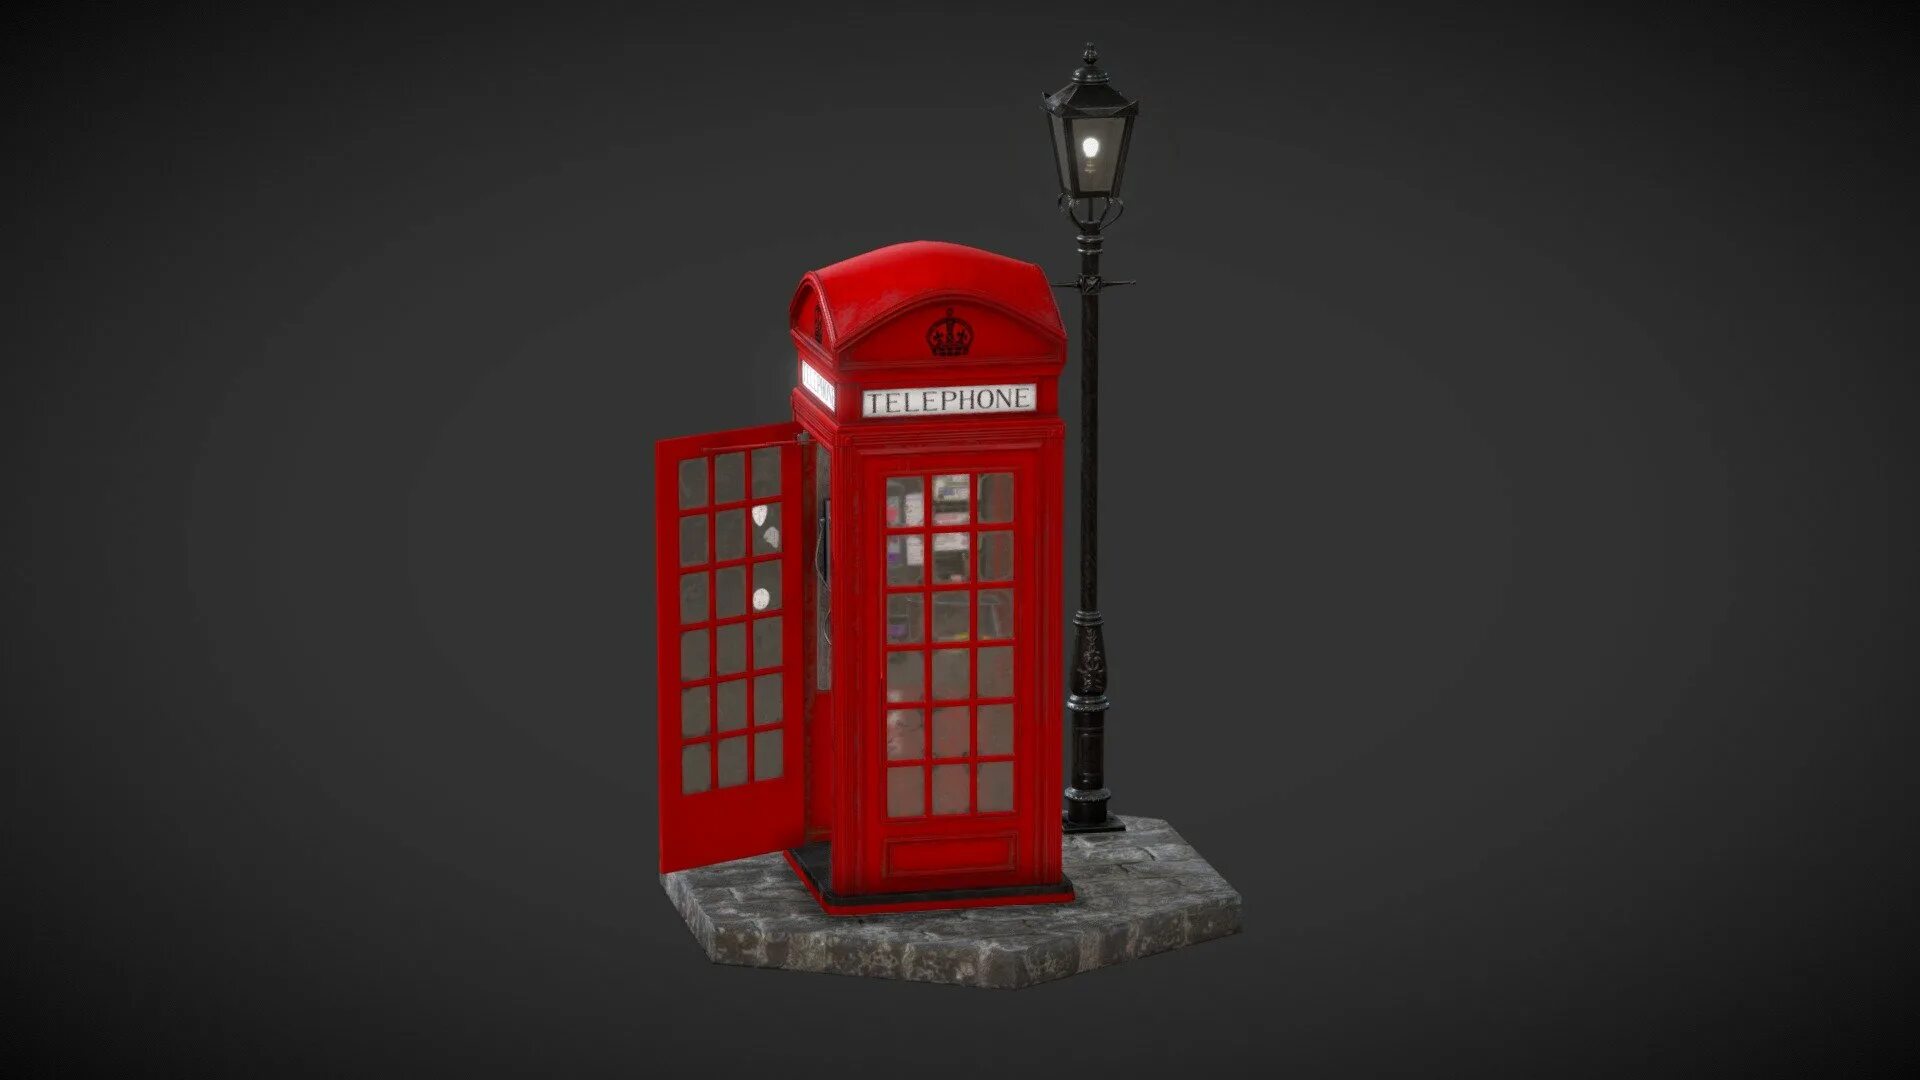 Red Phone Booth London. Модель: Red telephone Box. Лондон телефонный будка 3d model. Телефоны красной зоны